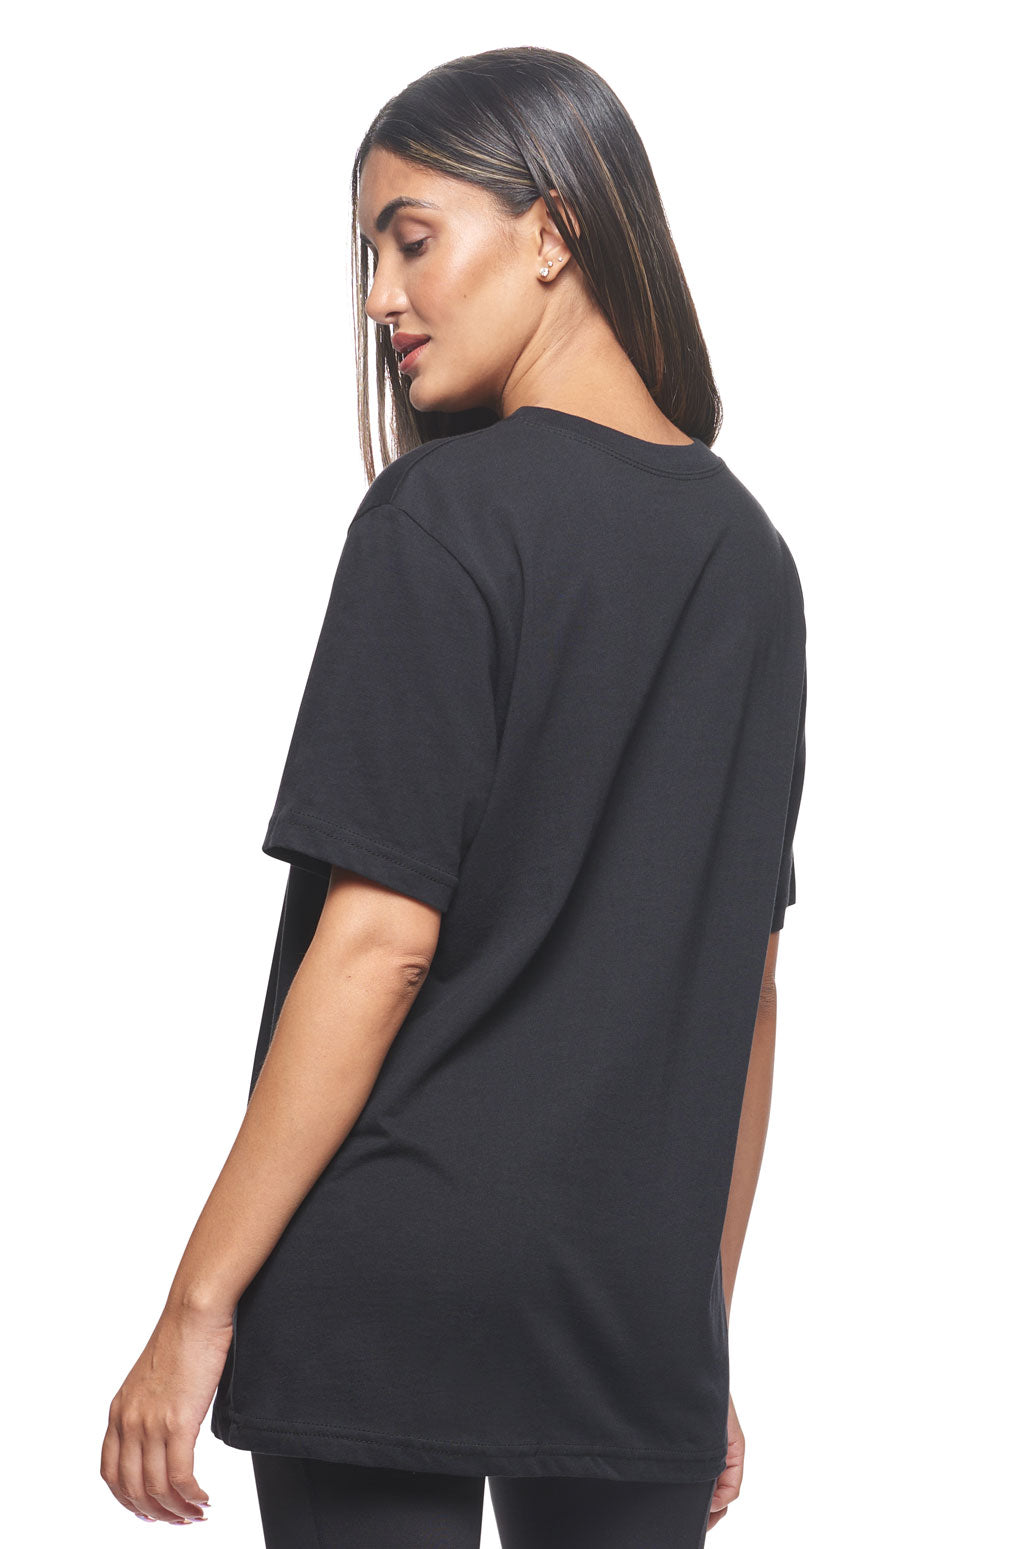 Expert Brand Wholesale Blank Organic Cotton T-Shirt Unisex